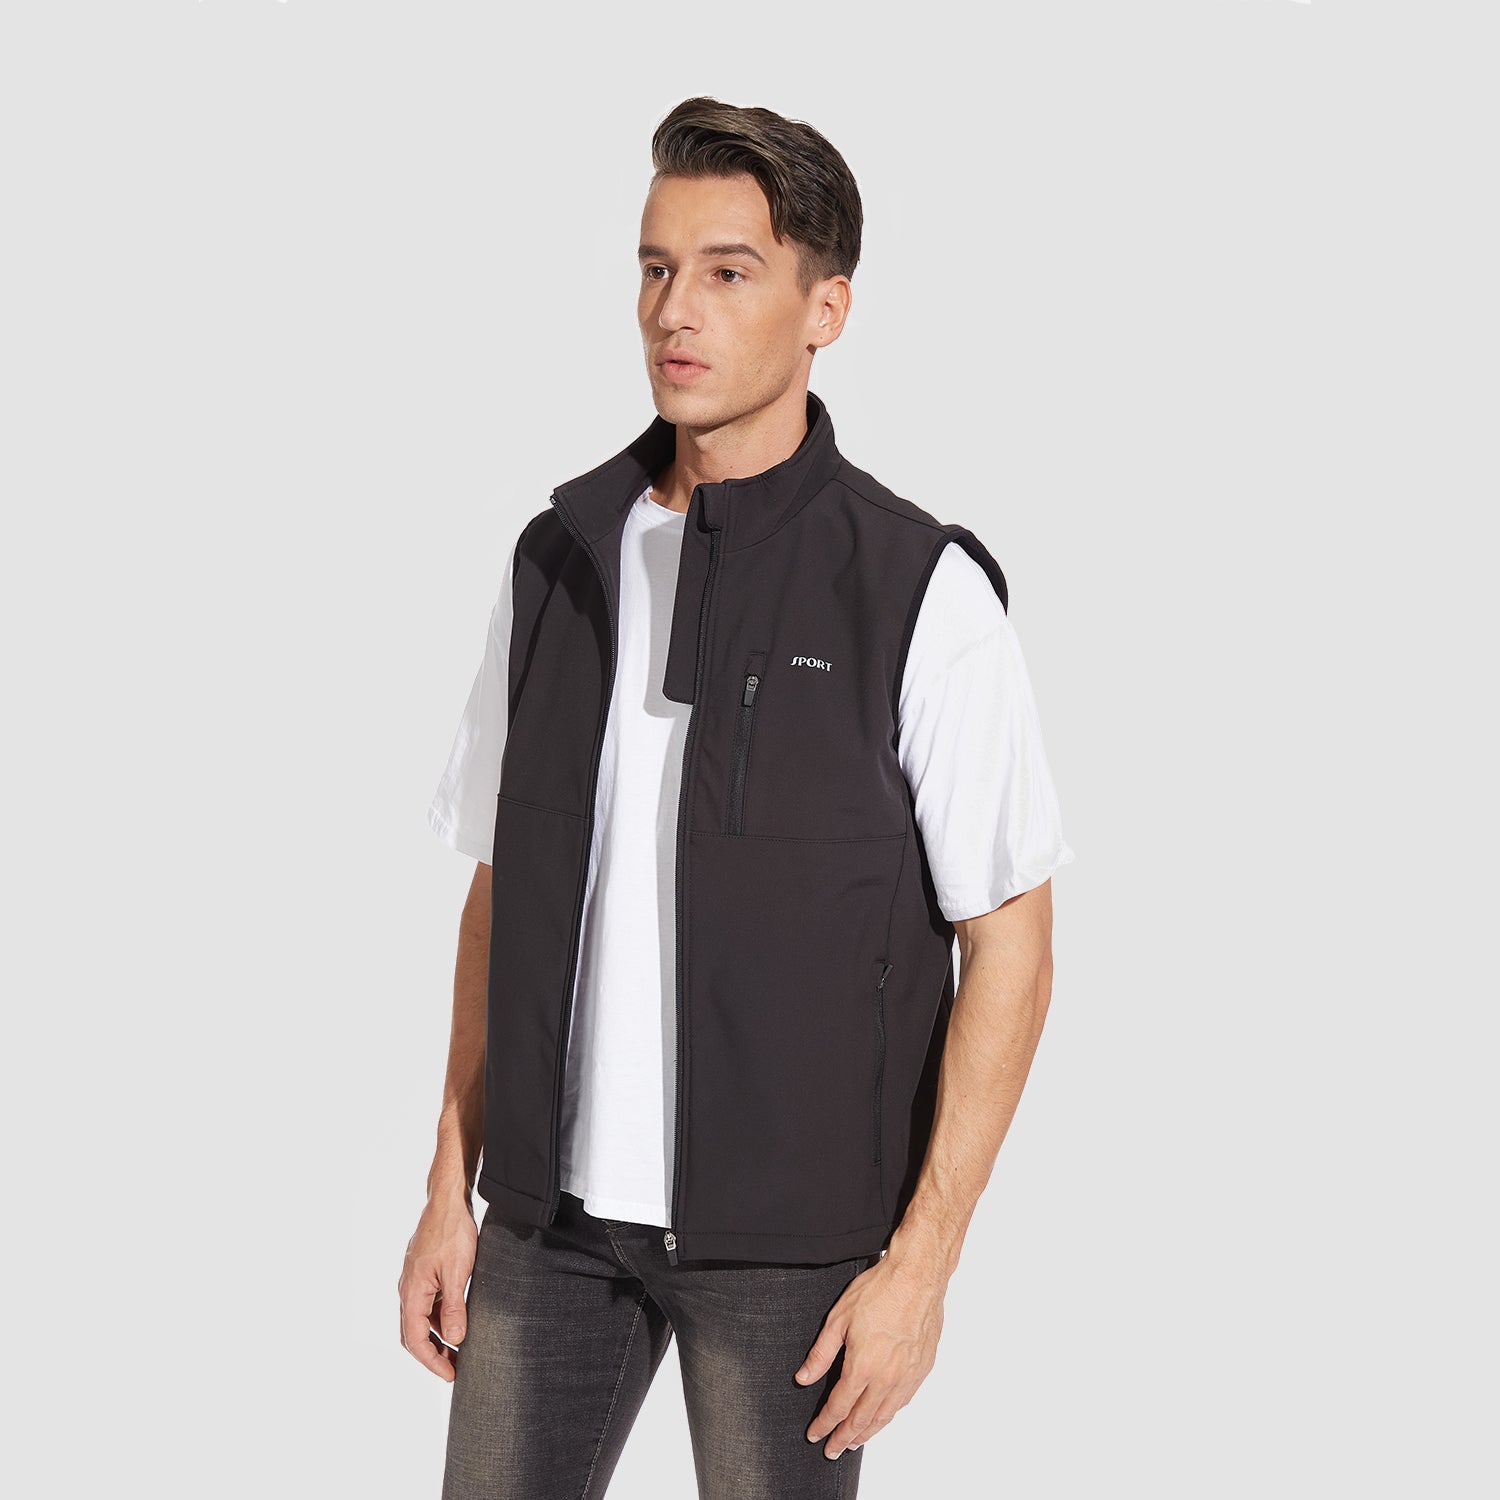 Men's Lightweight Vest Zip-up Sleeveless Jacket for Outdoors – MAGCOMSEN